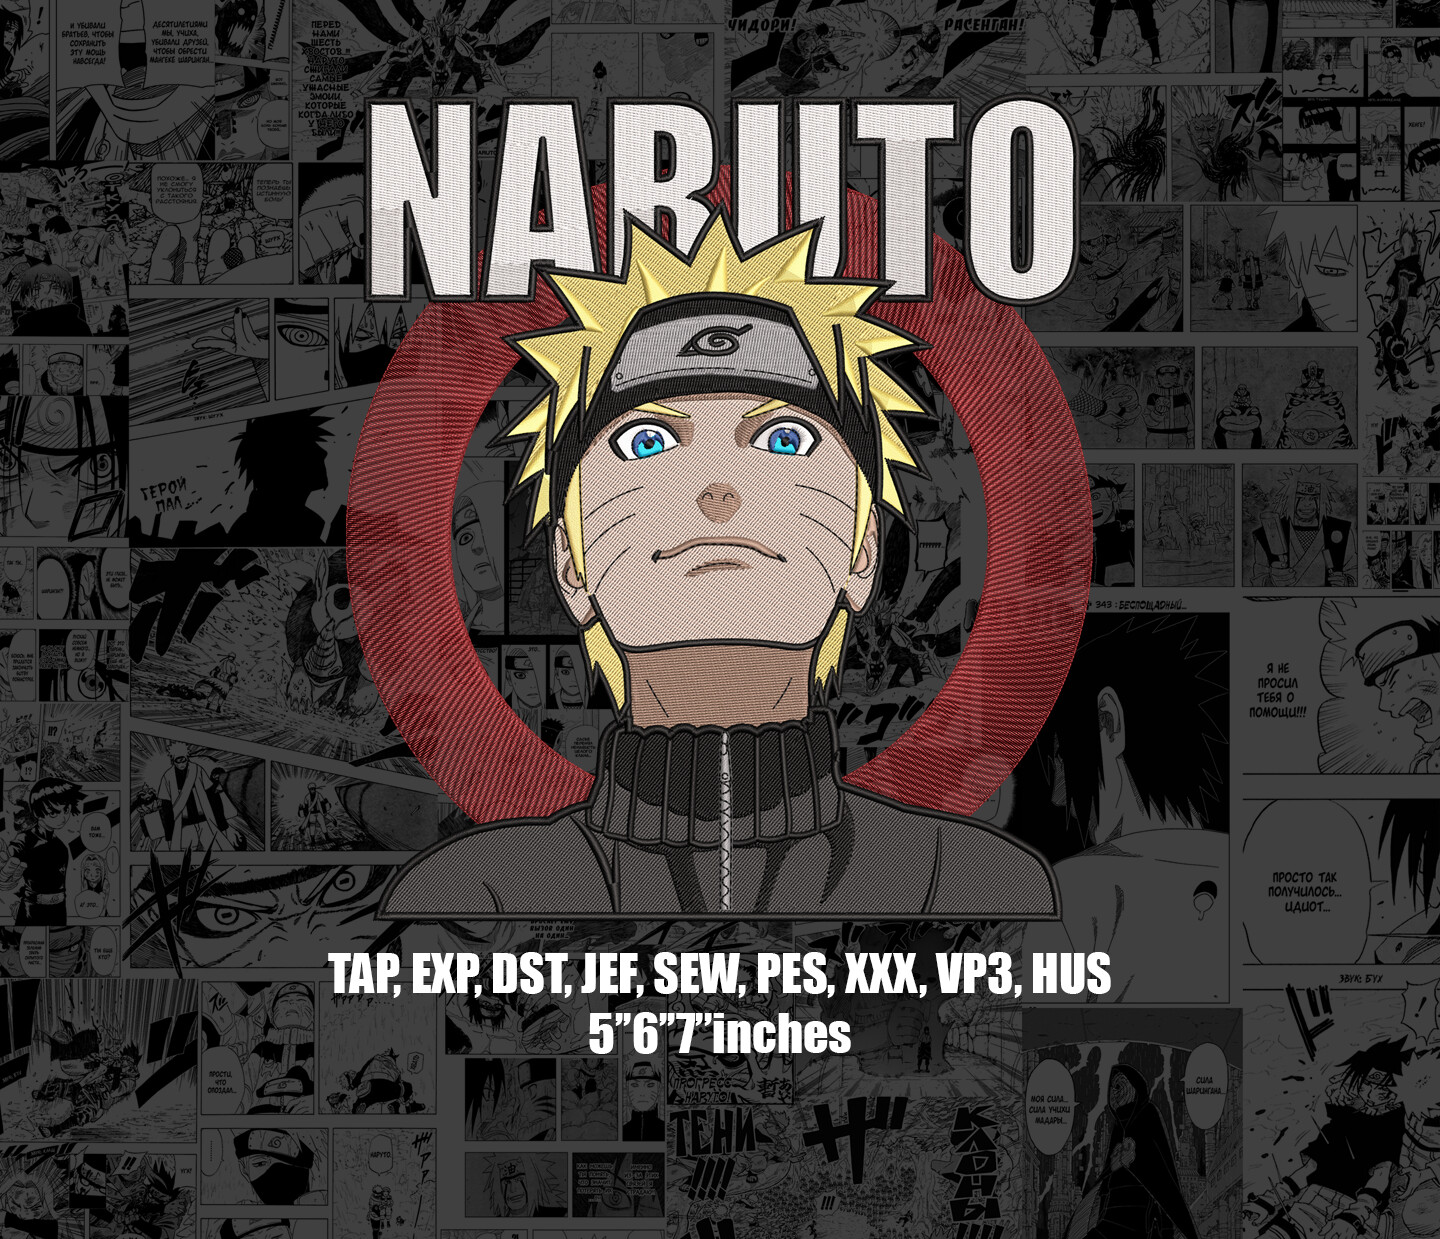 Uzumaki Naruto by NSC.gd on Dribbble